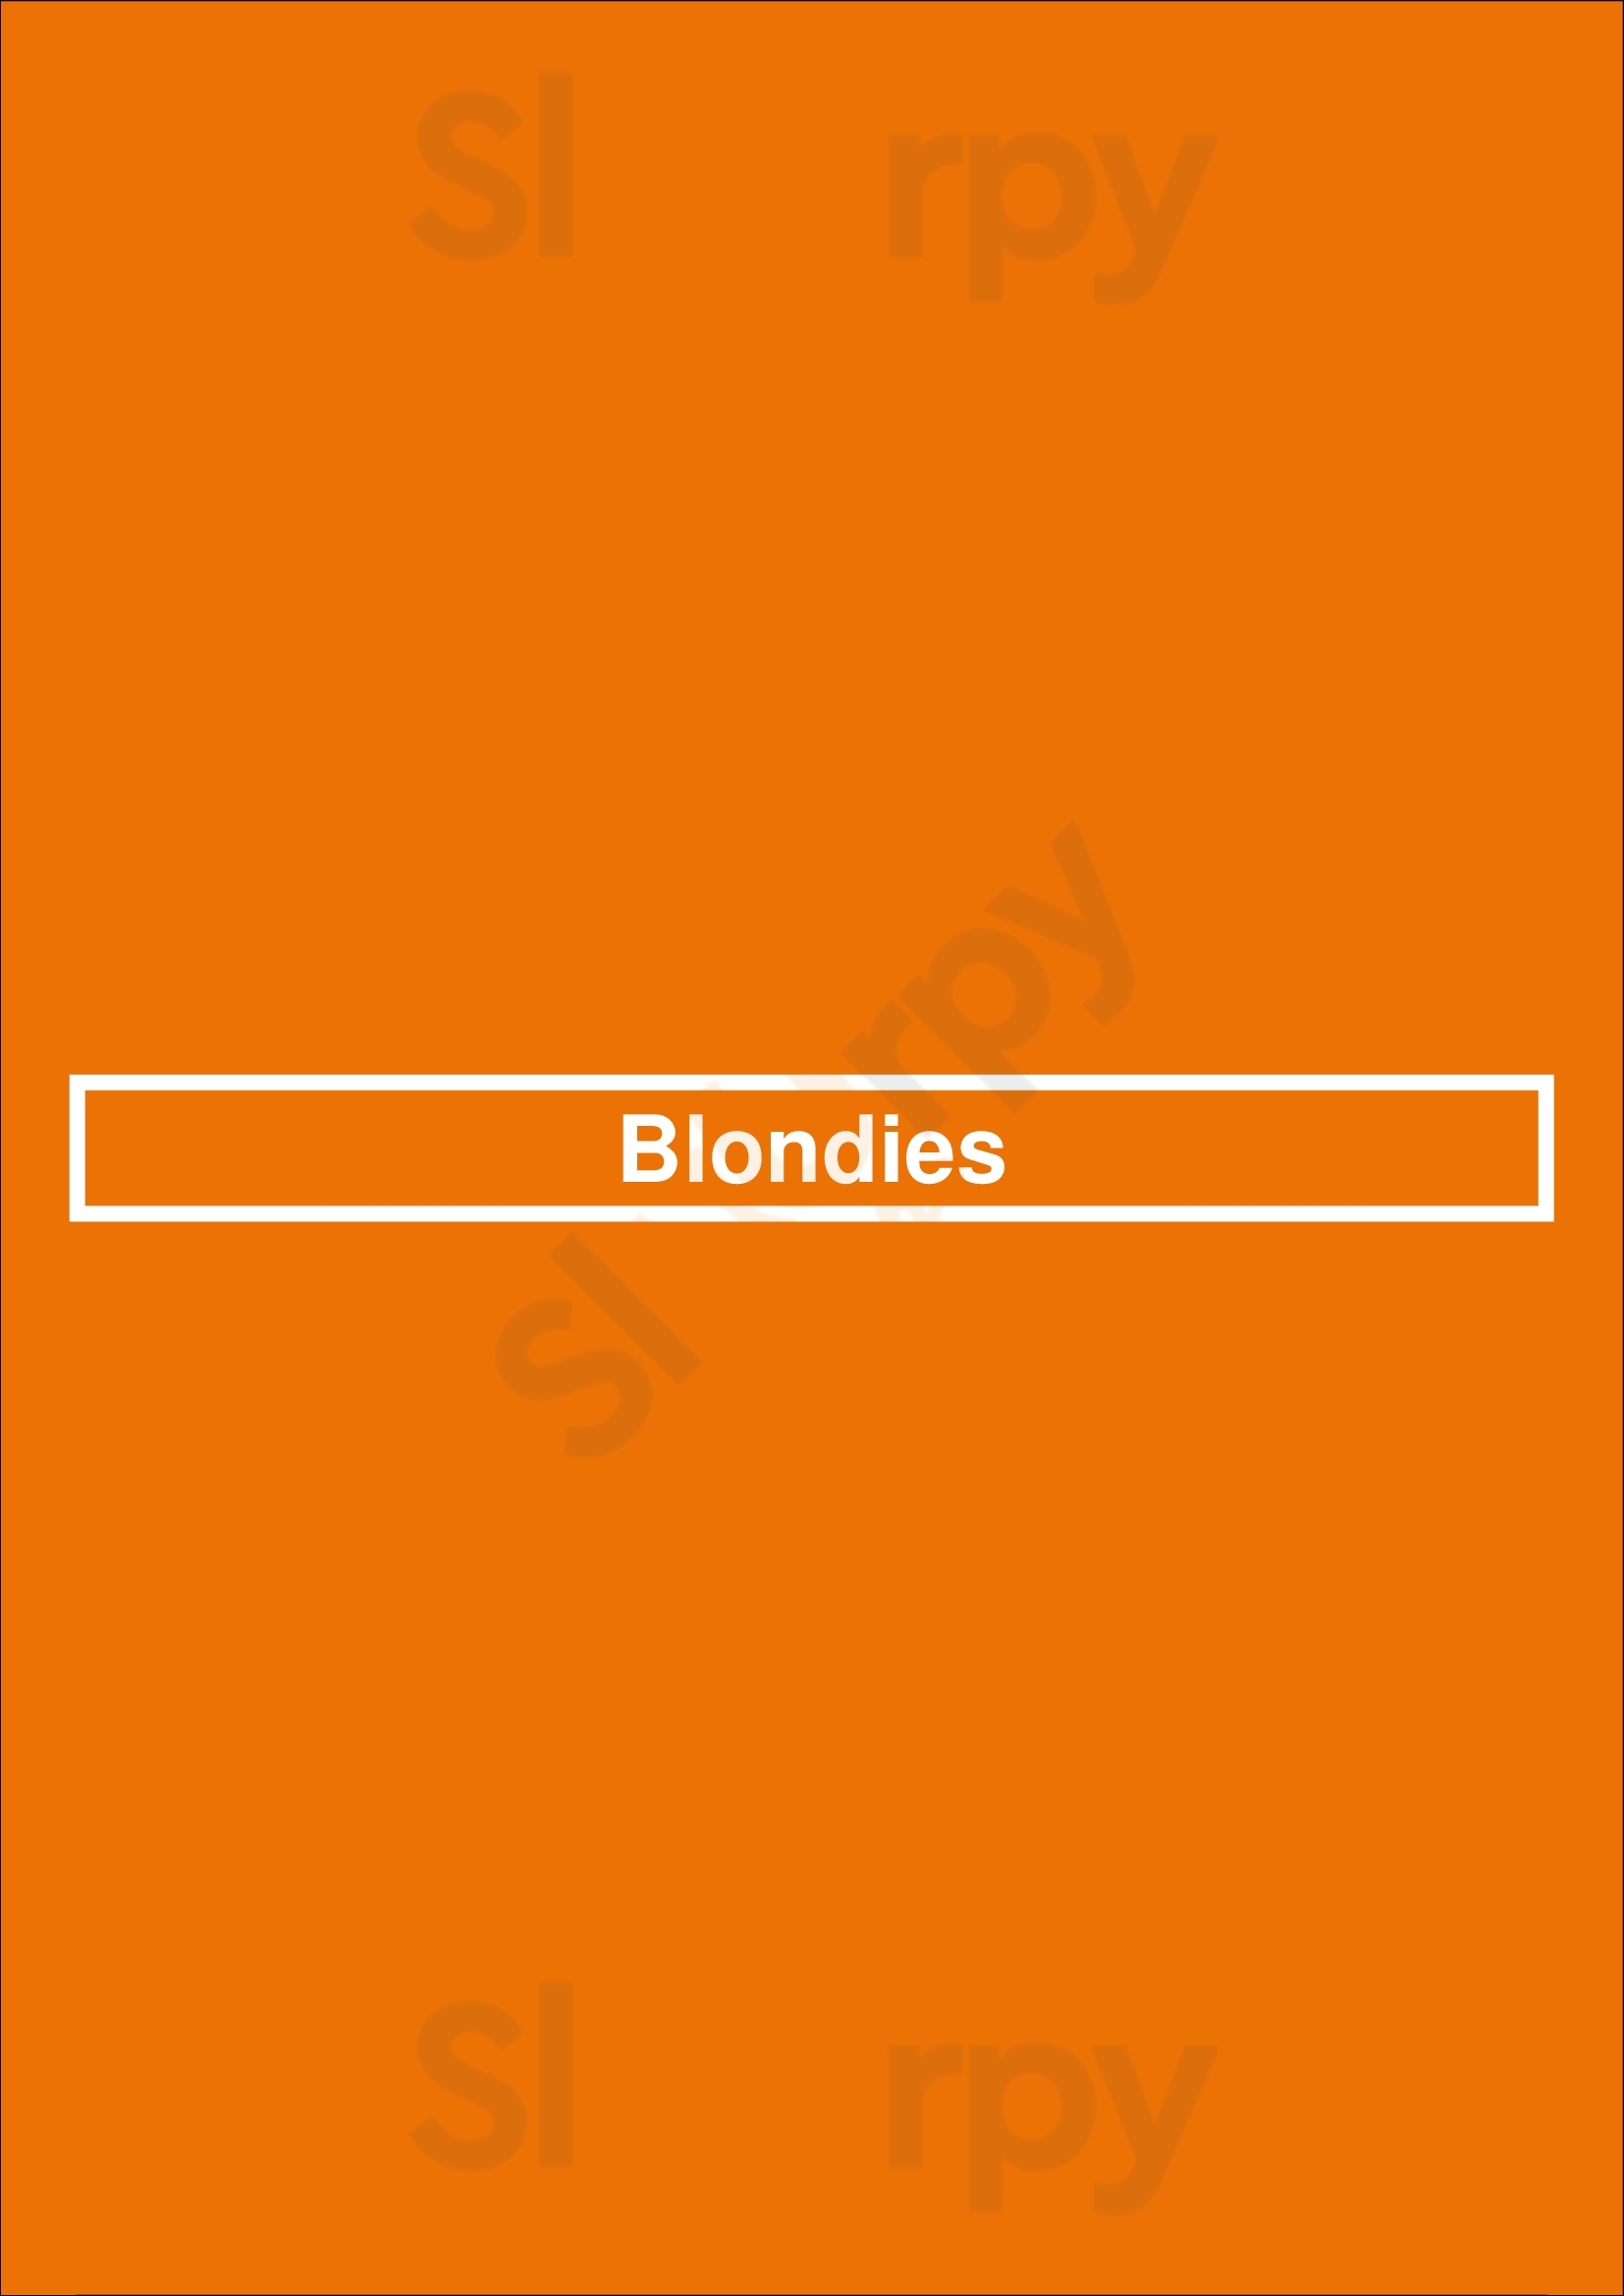 Blondies Winnipeg Menu - 1